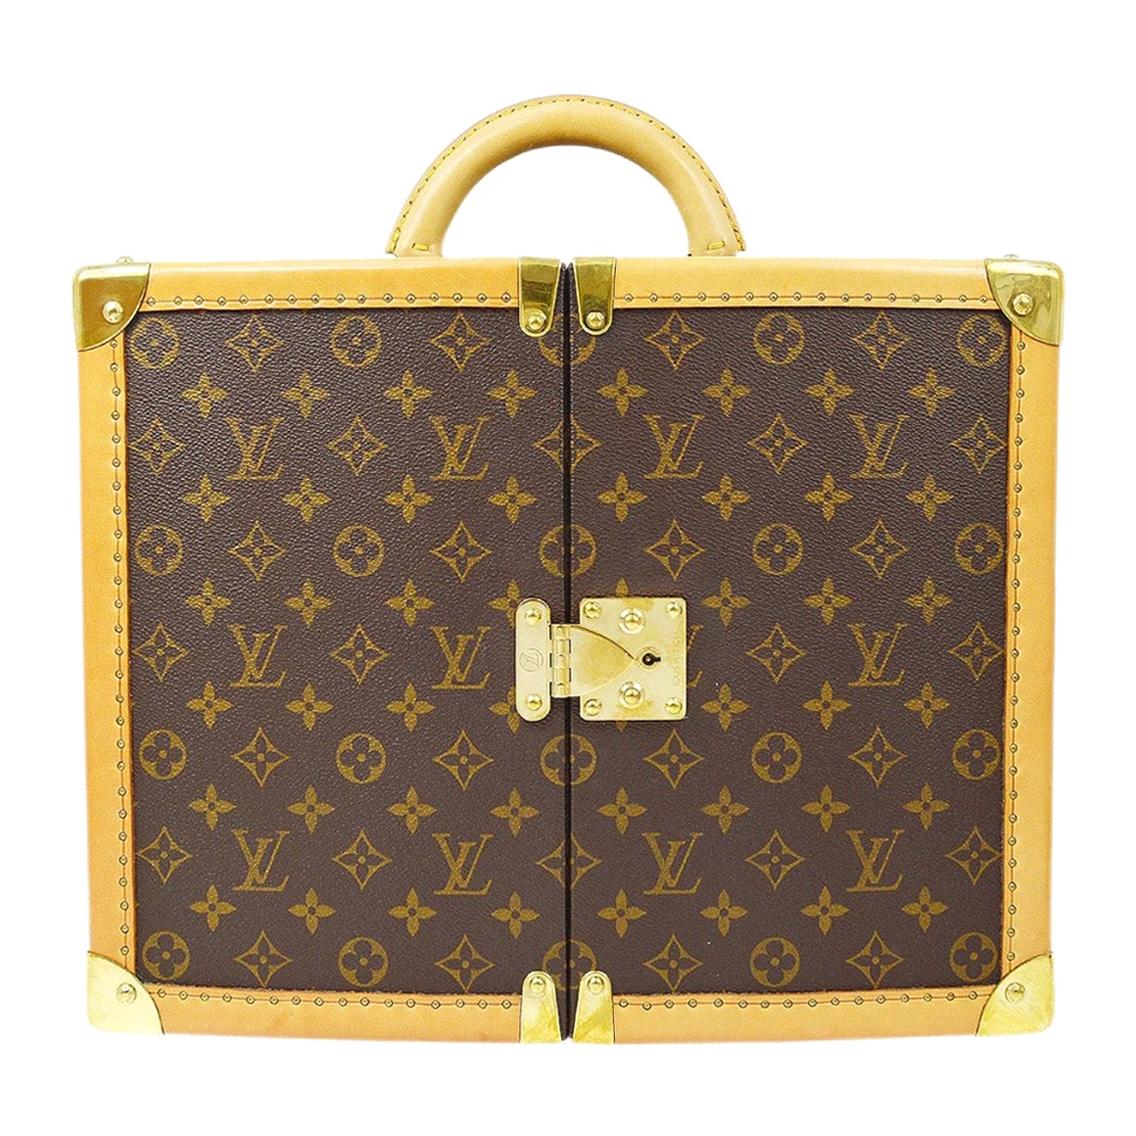 Louis Vuitton Amfar Sharon Stone - For Sale on 1stDibs